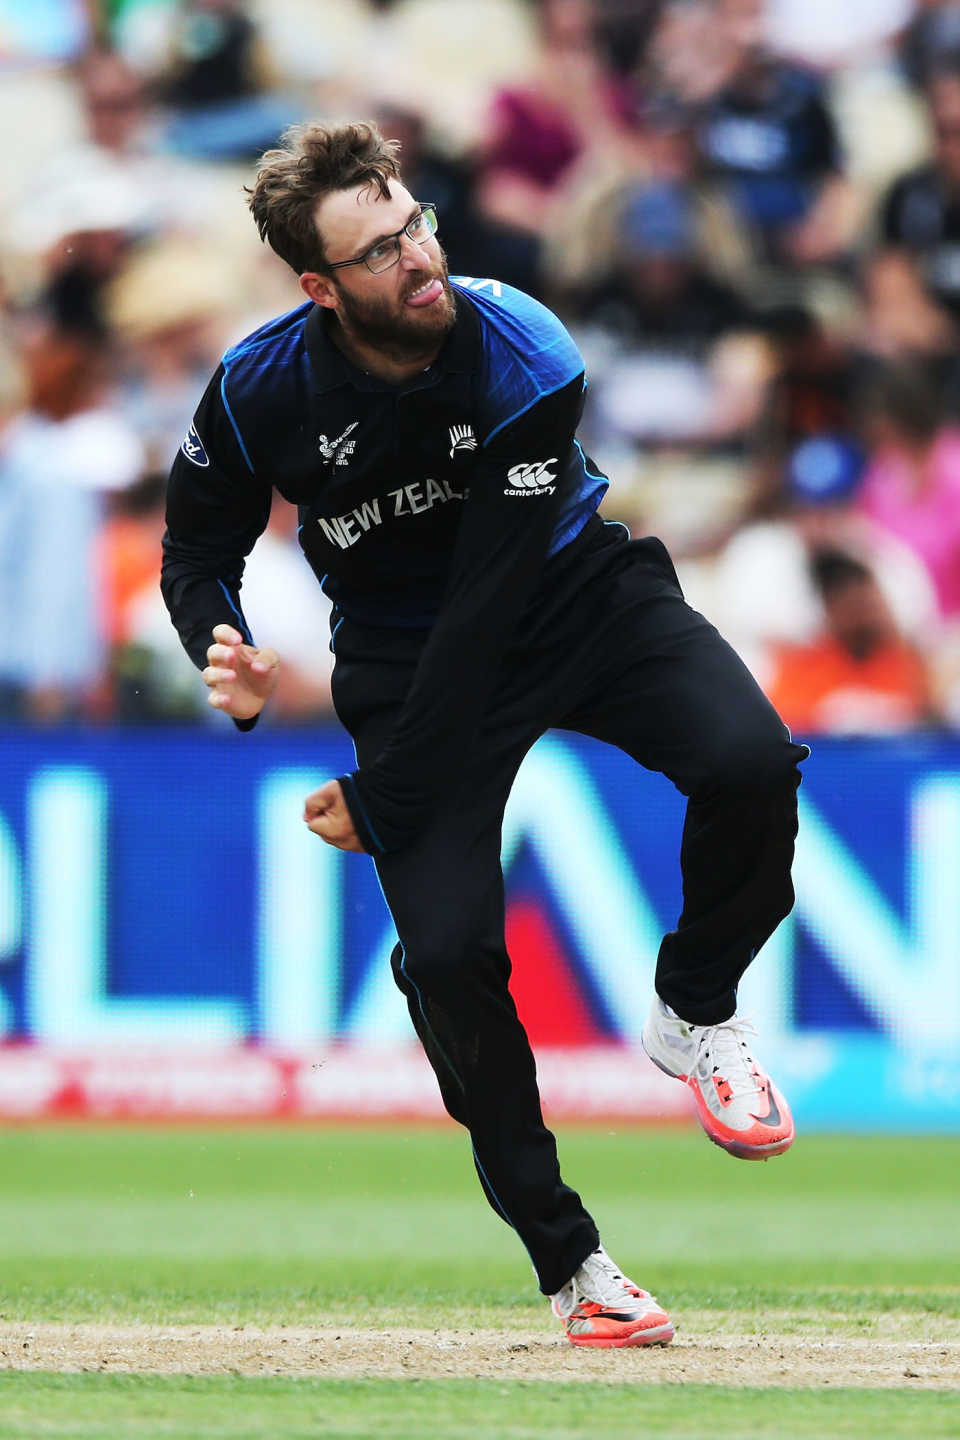 Daniel Vettori lets one fly